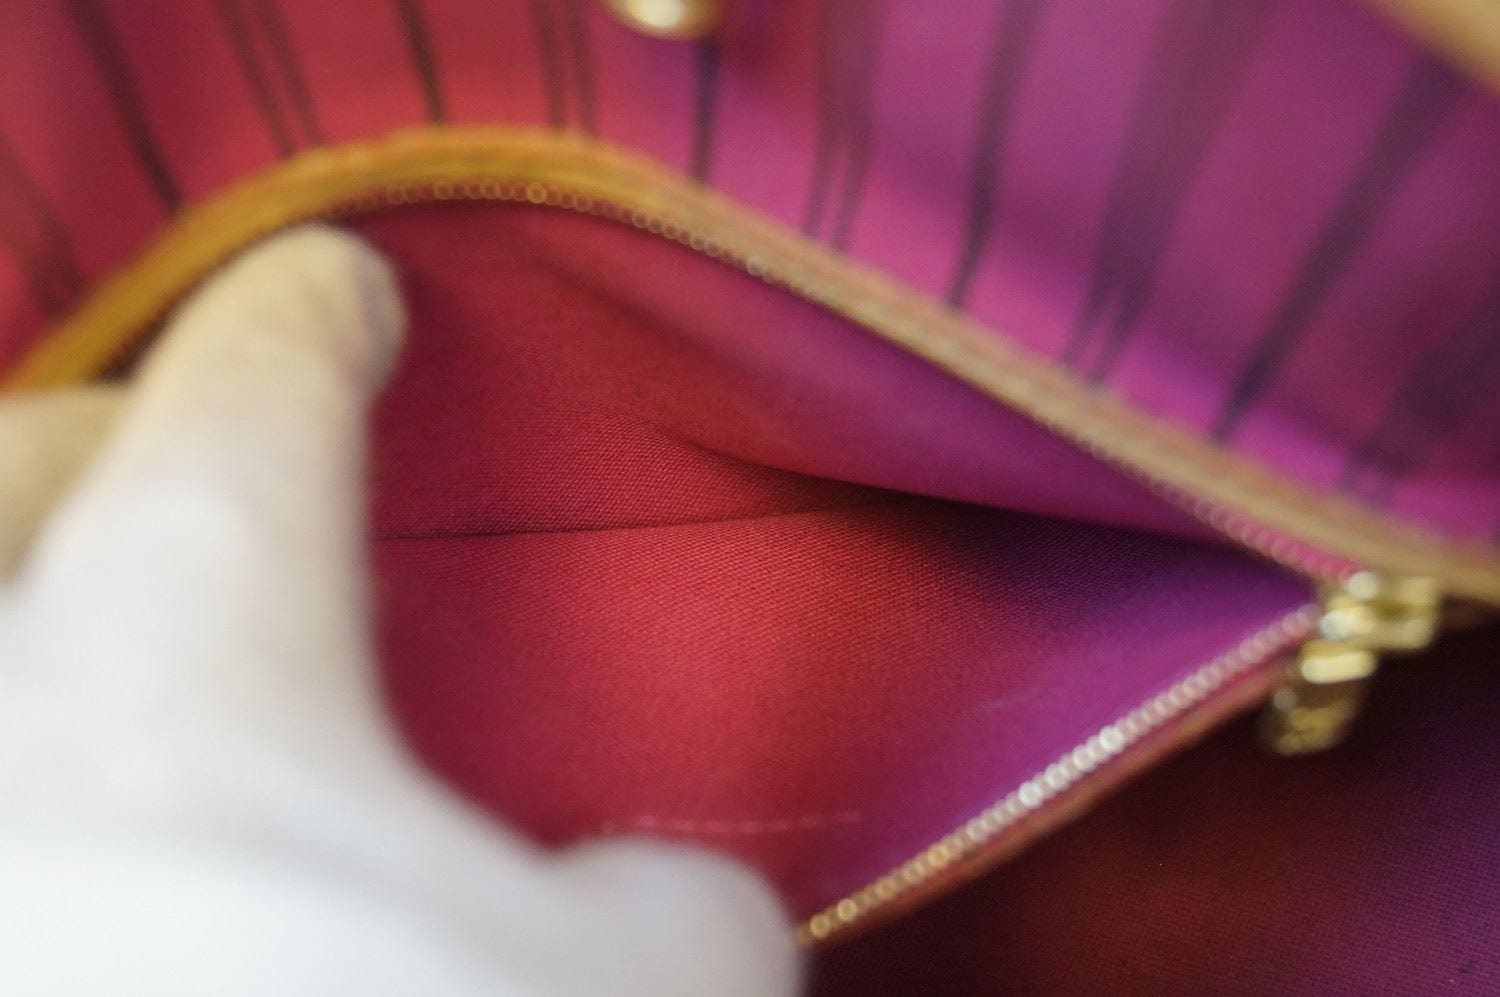 Louis Vuitton Neverfull GM in Monogram Canvas with Pivoine Pink Interior